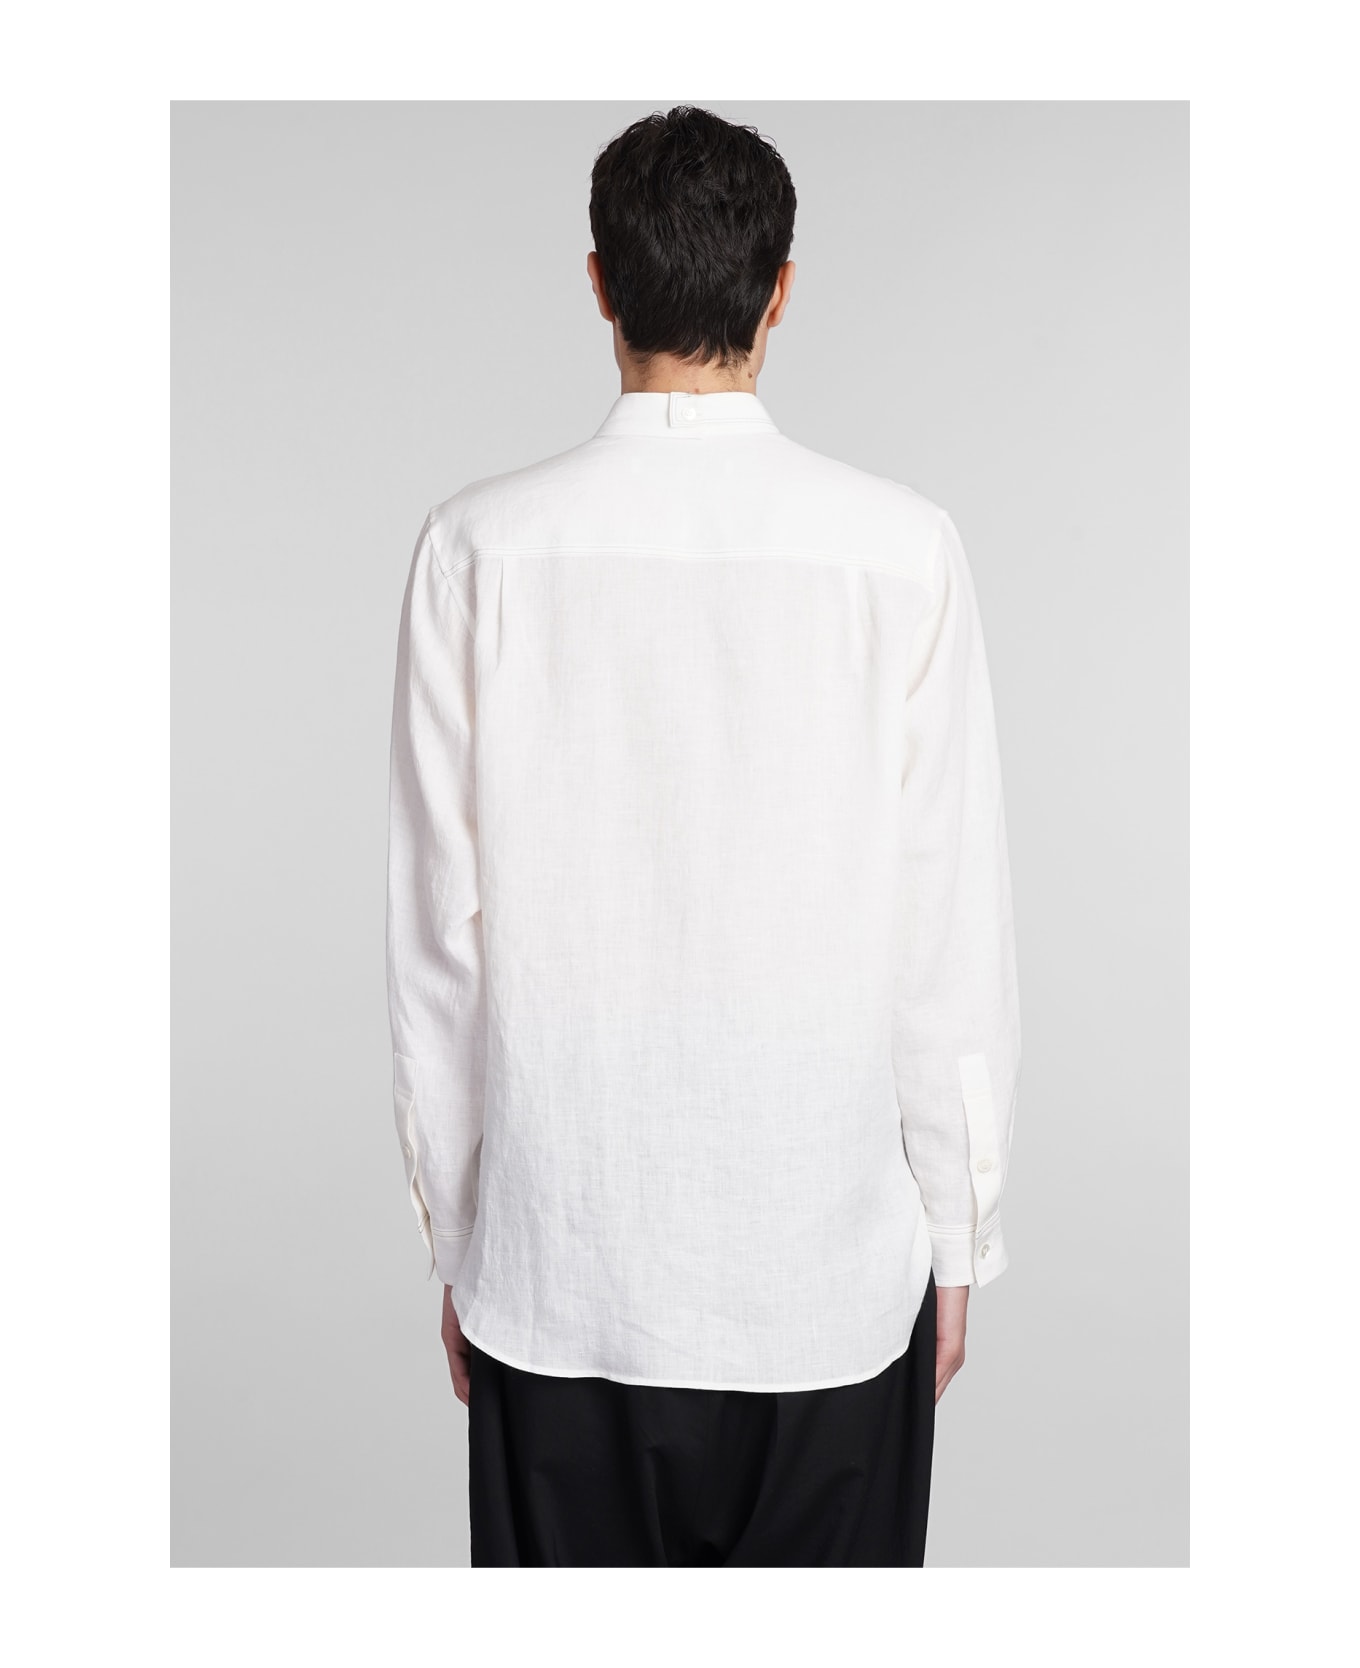 Yohji Yamamoto Shirt In White Linen - white シャツ